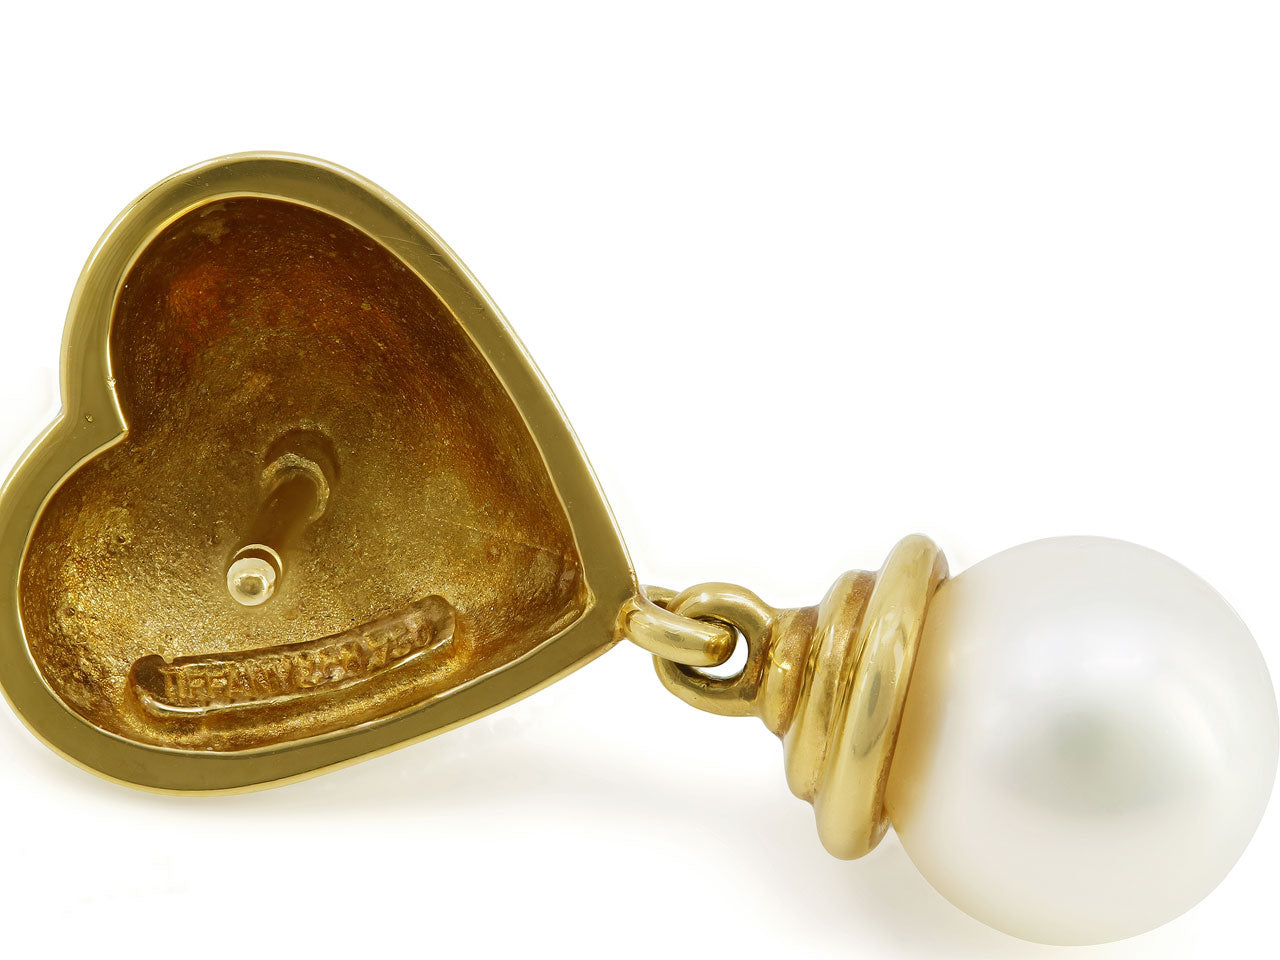 Tiffany & Co. Pearl and Heart Earrings in 18K Gold